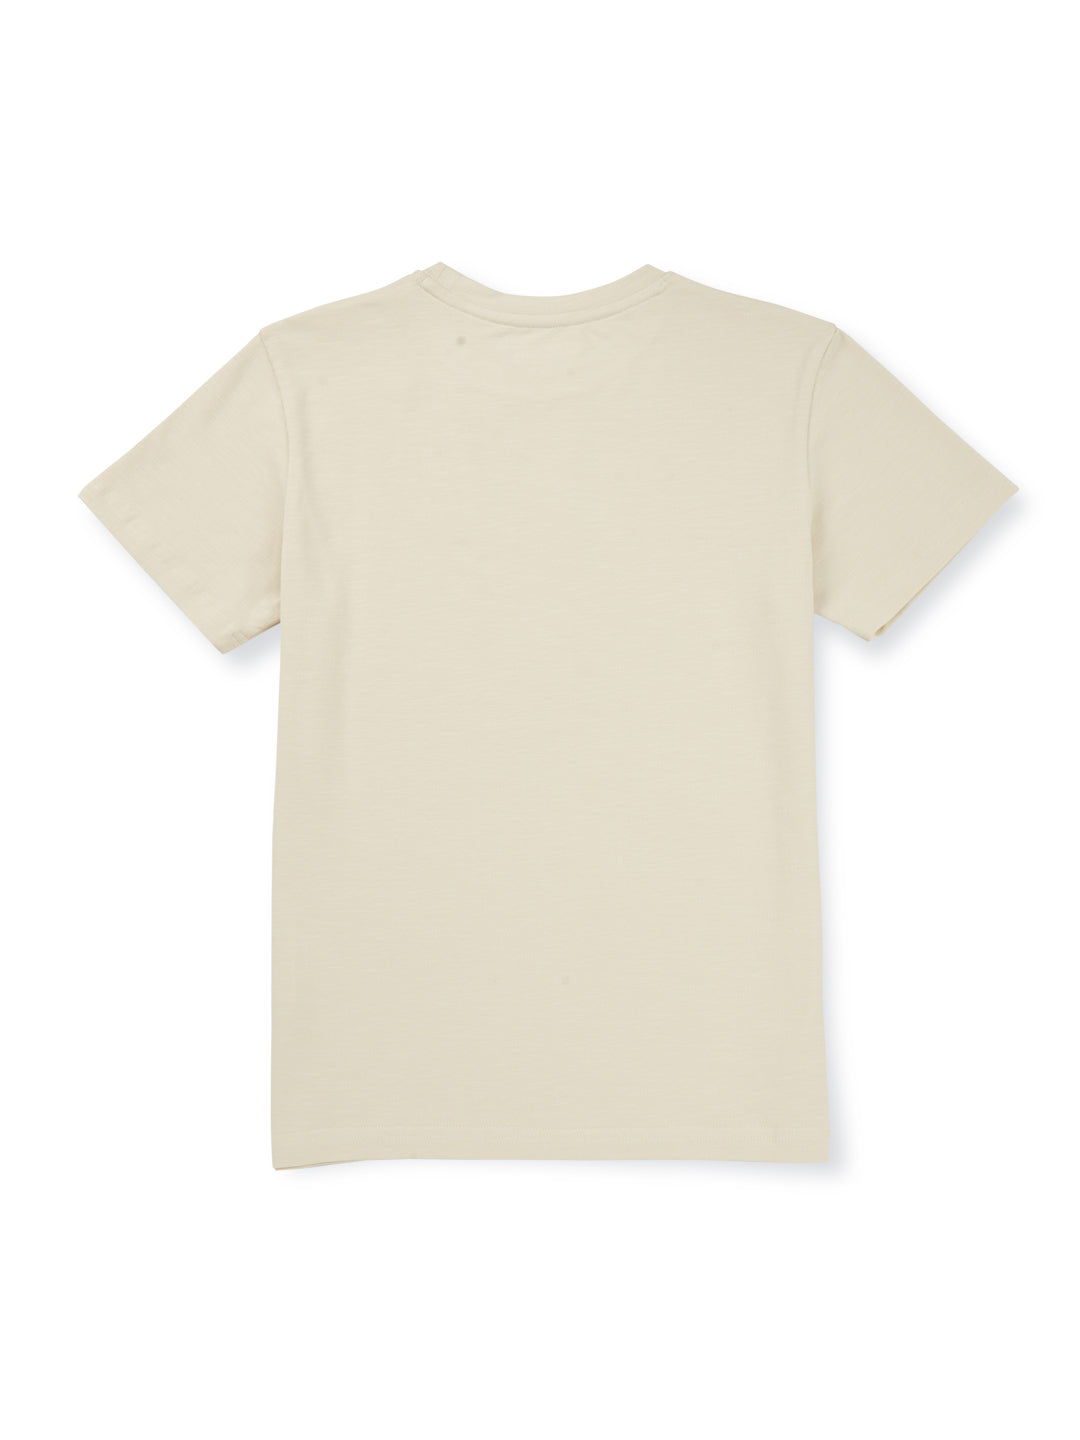 Boys Beige Cotton Solid T-Shirt